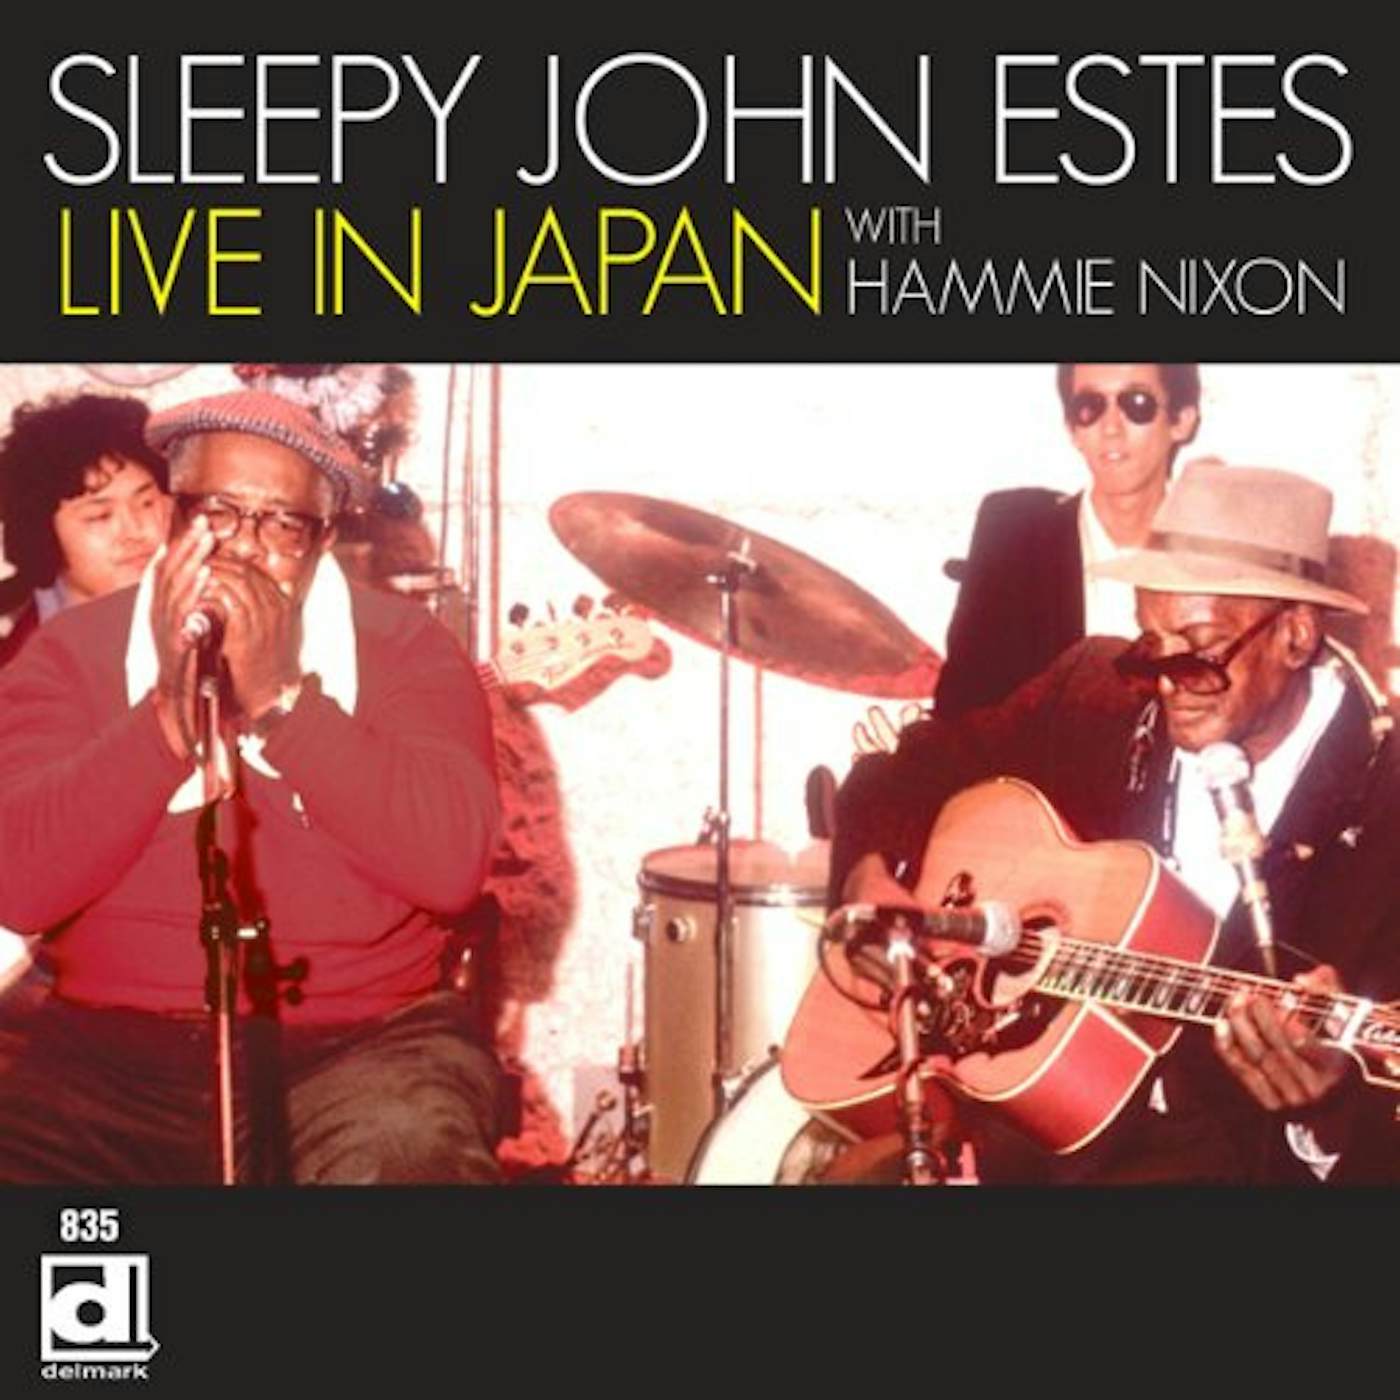 Sleepy John Estes LIVE IN JAPAN WITH HAMMIE NIXON CD